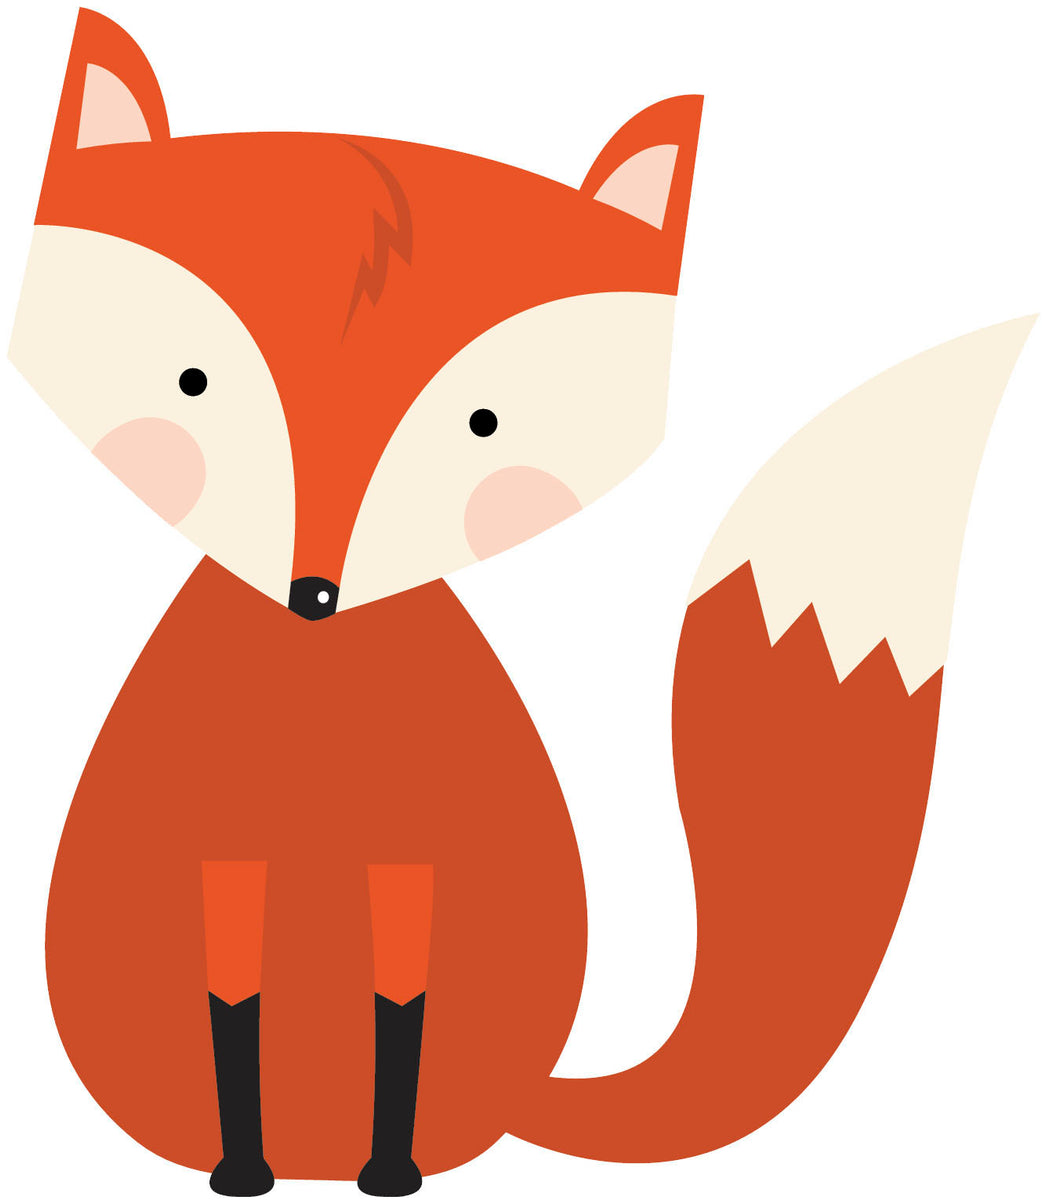 Cute Little Friendly Forest Animal Cartoon - Fox Vinyl Decal Sticker